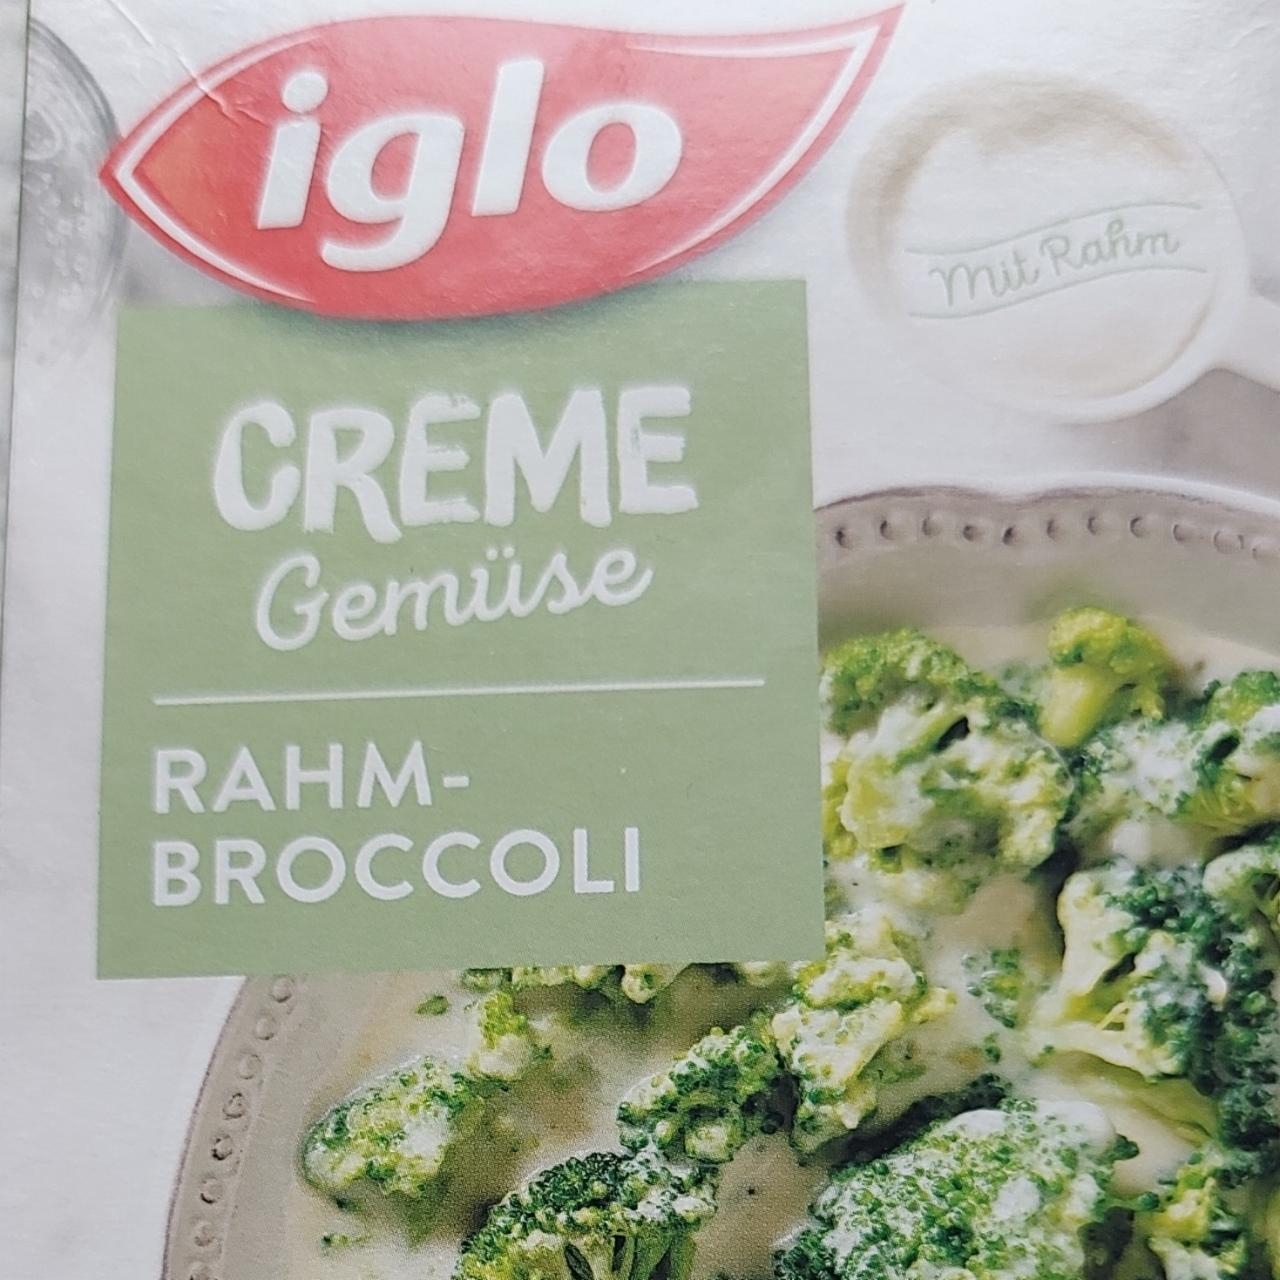 Fotografie - Creme gemüse rahm-broccoli Iglo